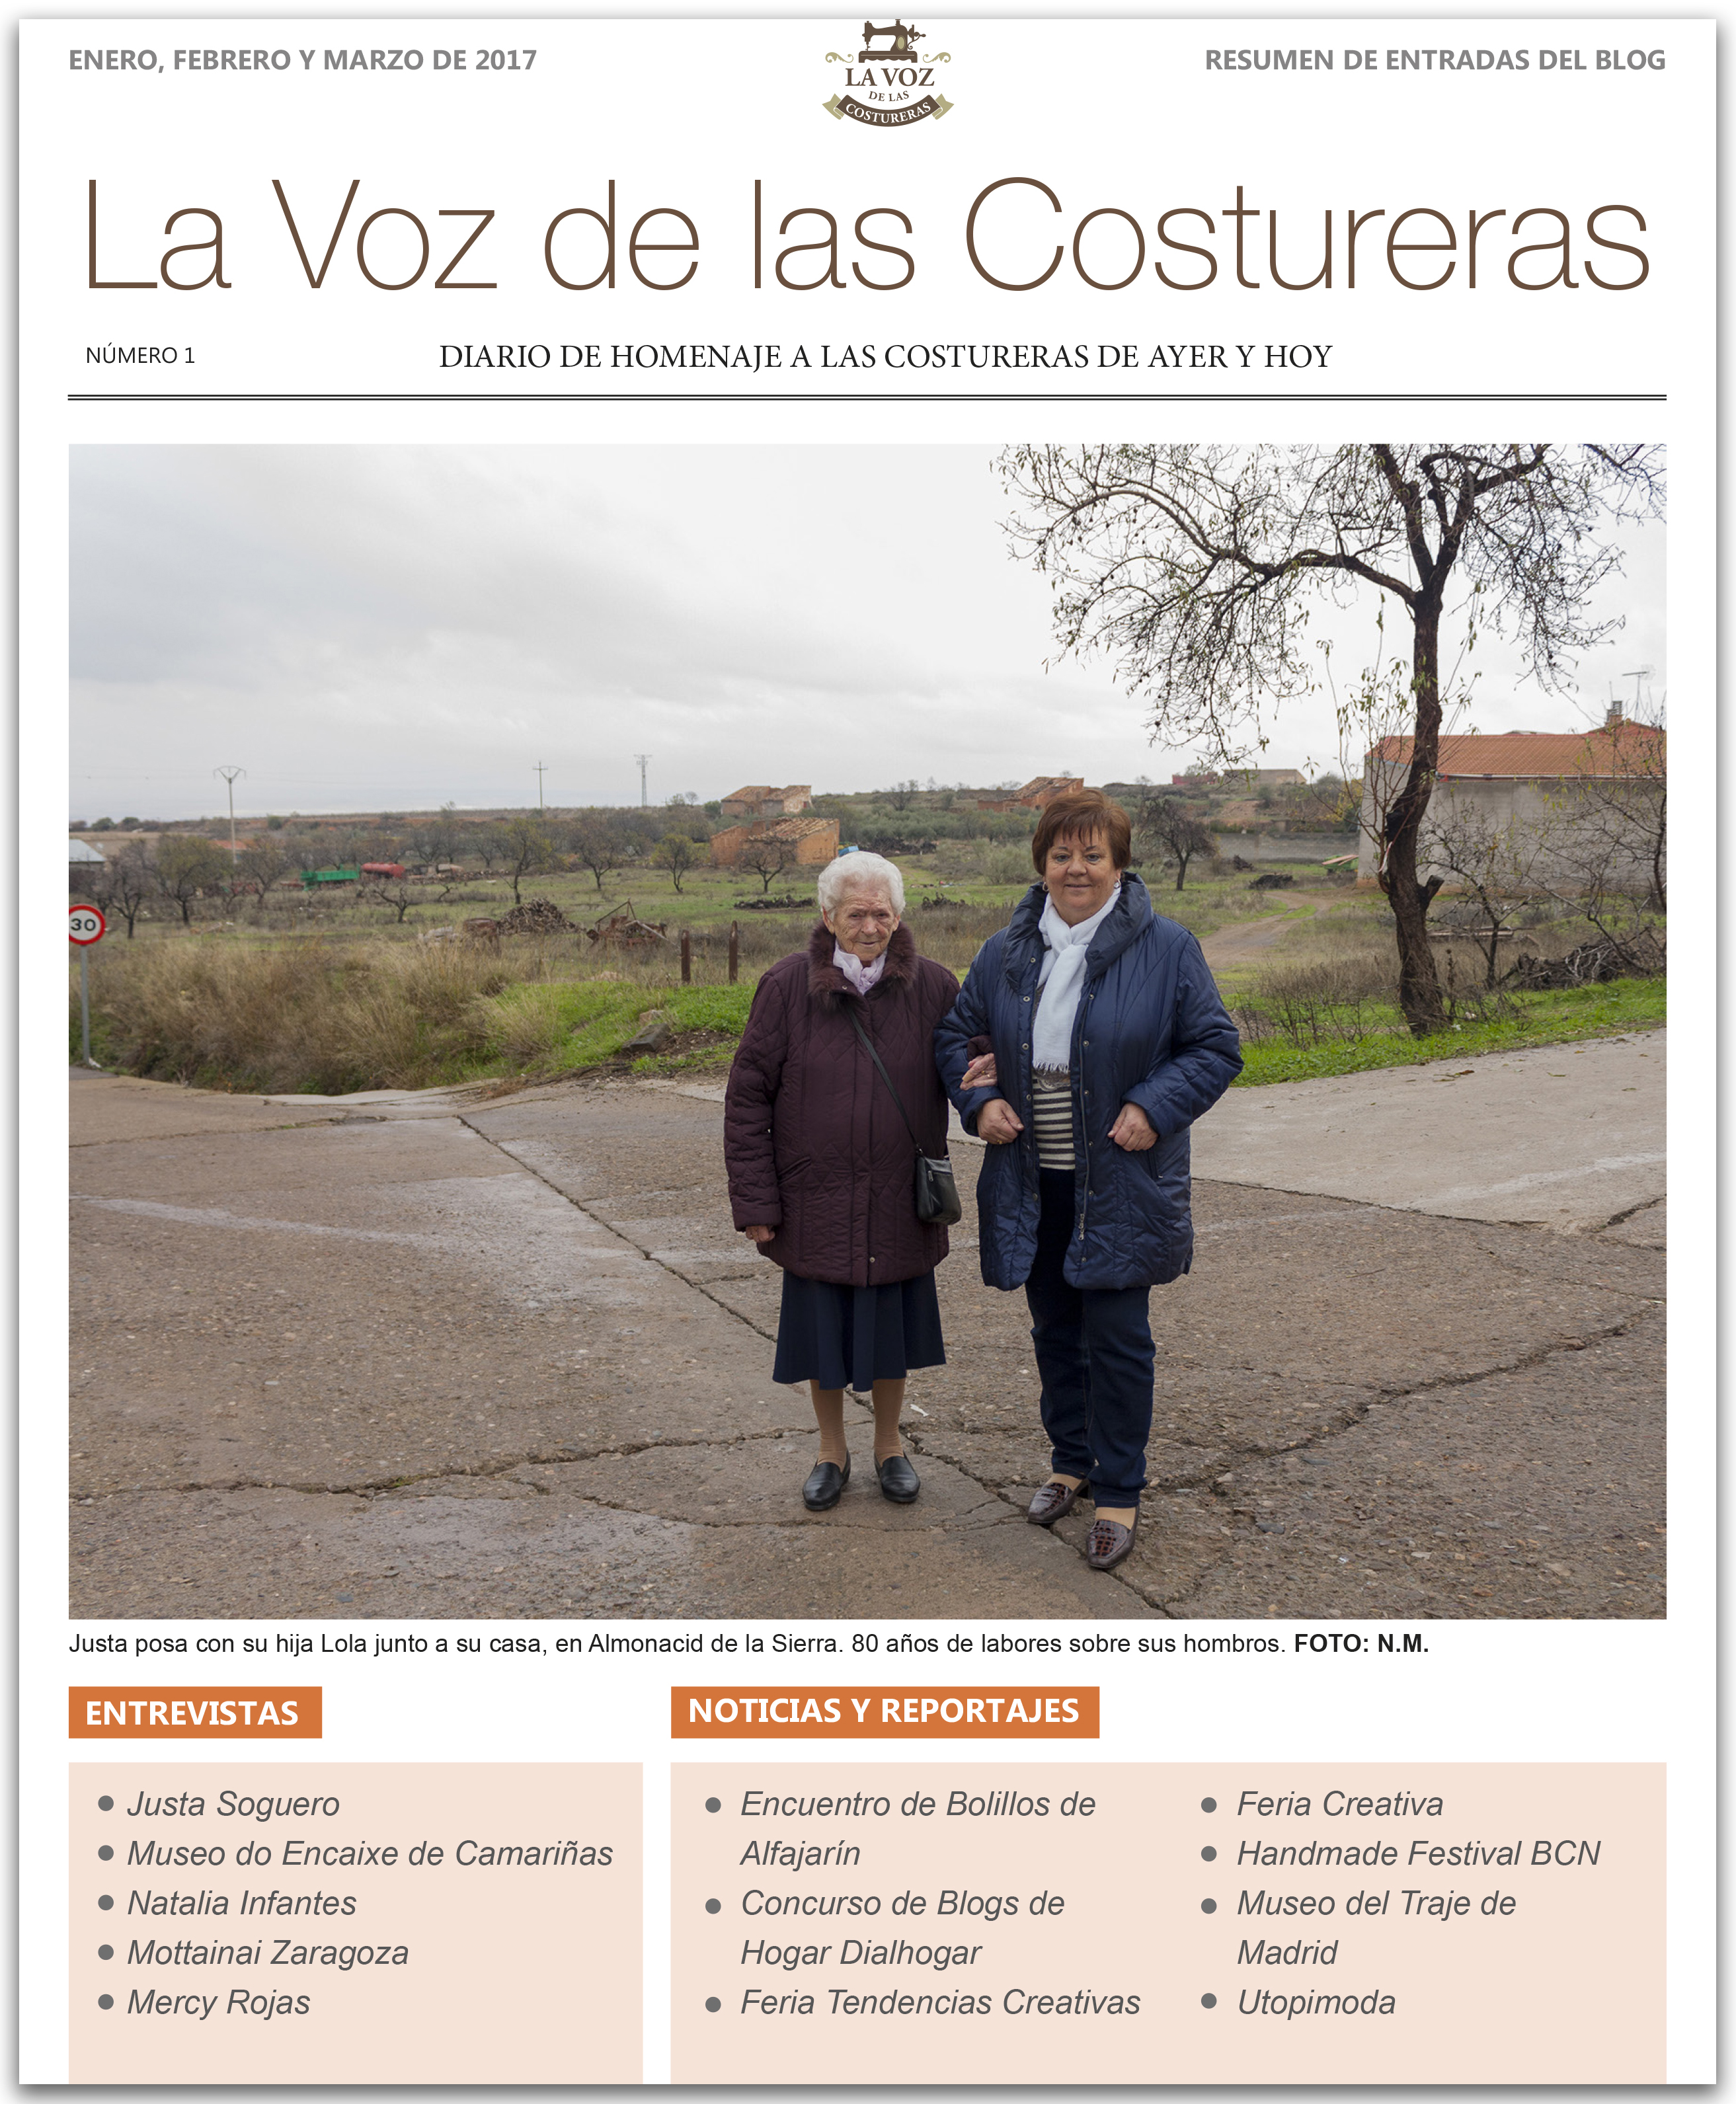 La Voz de las Costureras, resumen post 1º trimestre 2017 en www.blurb.es